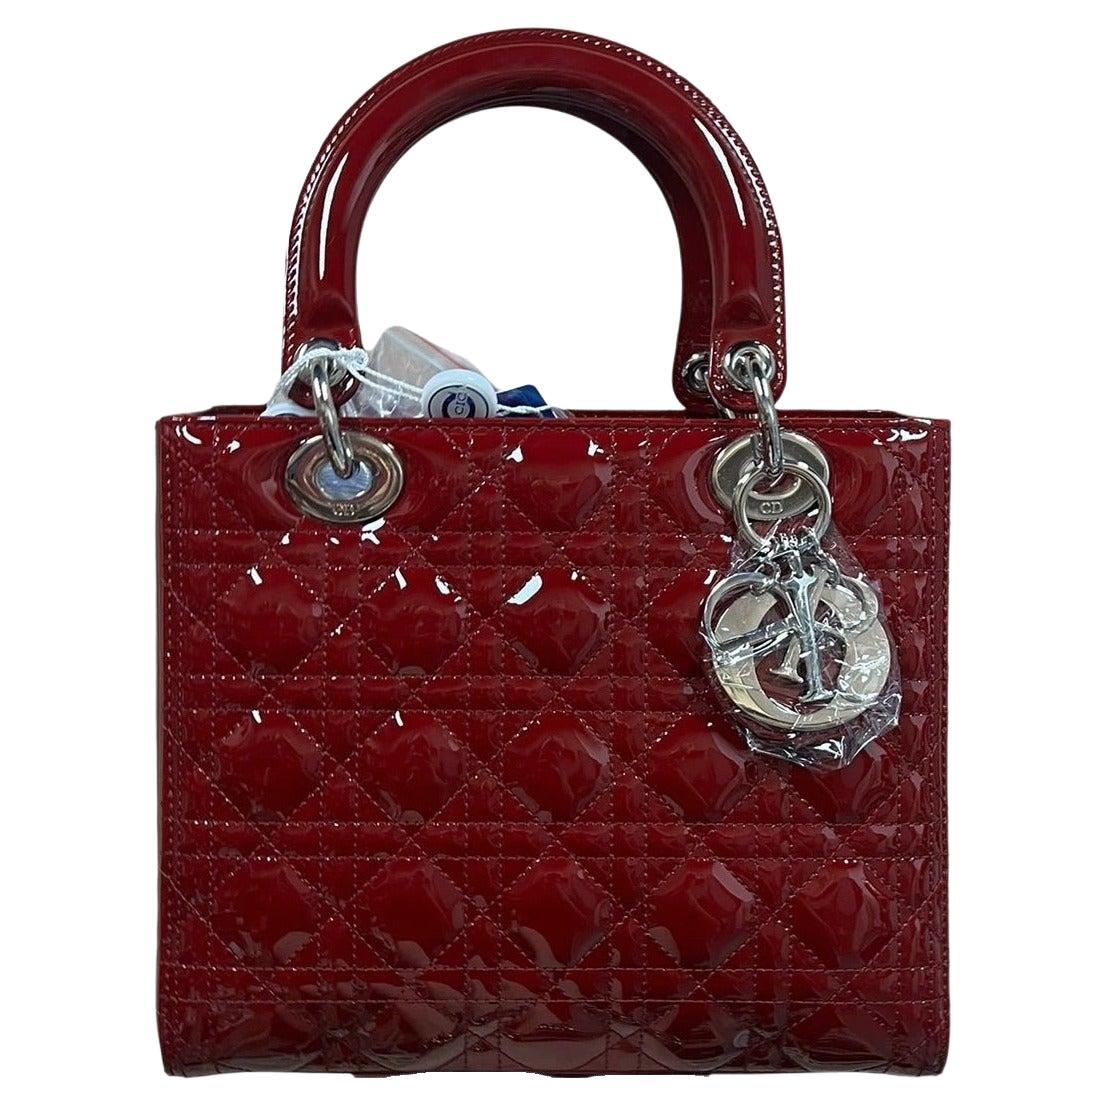 Lady Dior 2017 Medium Burgundy Patent Leather Handbag Adjustable Strap For Sale